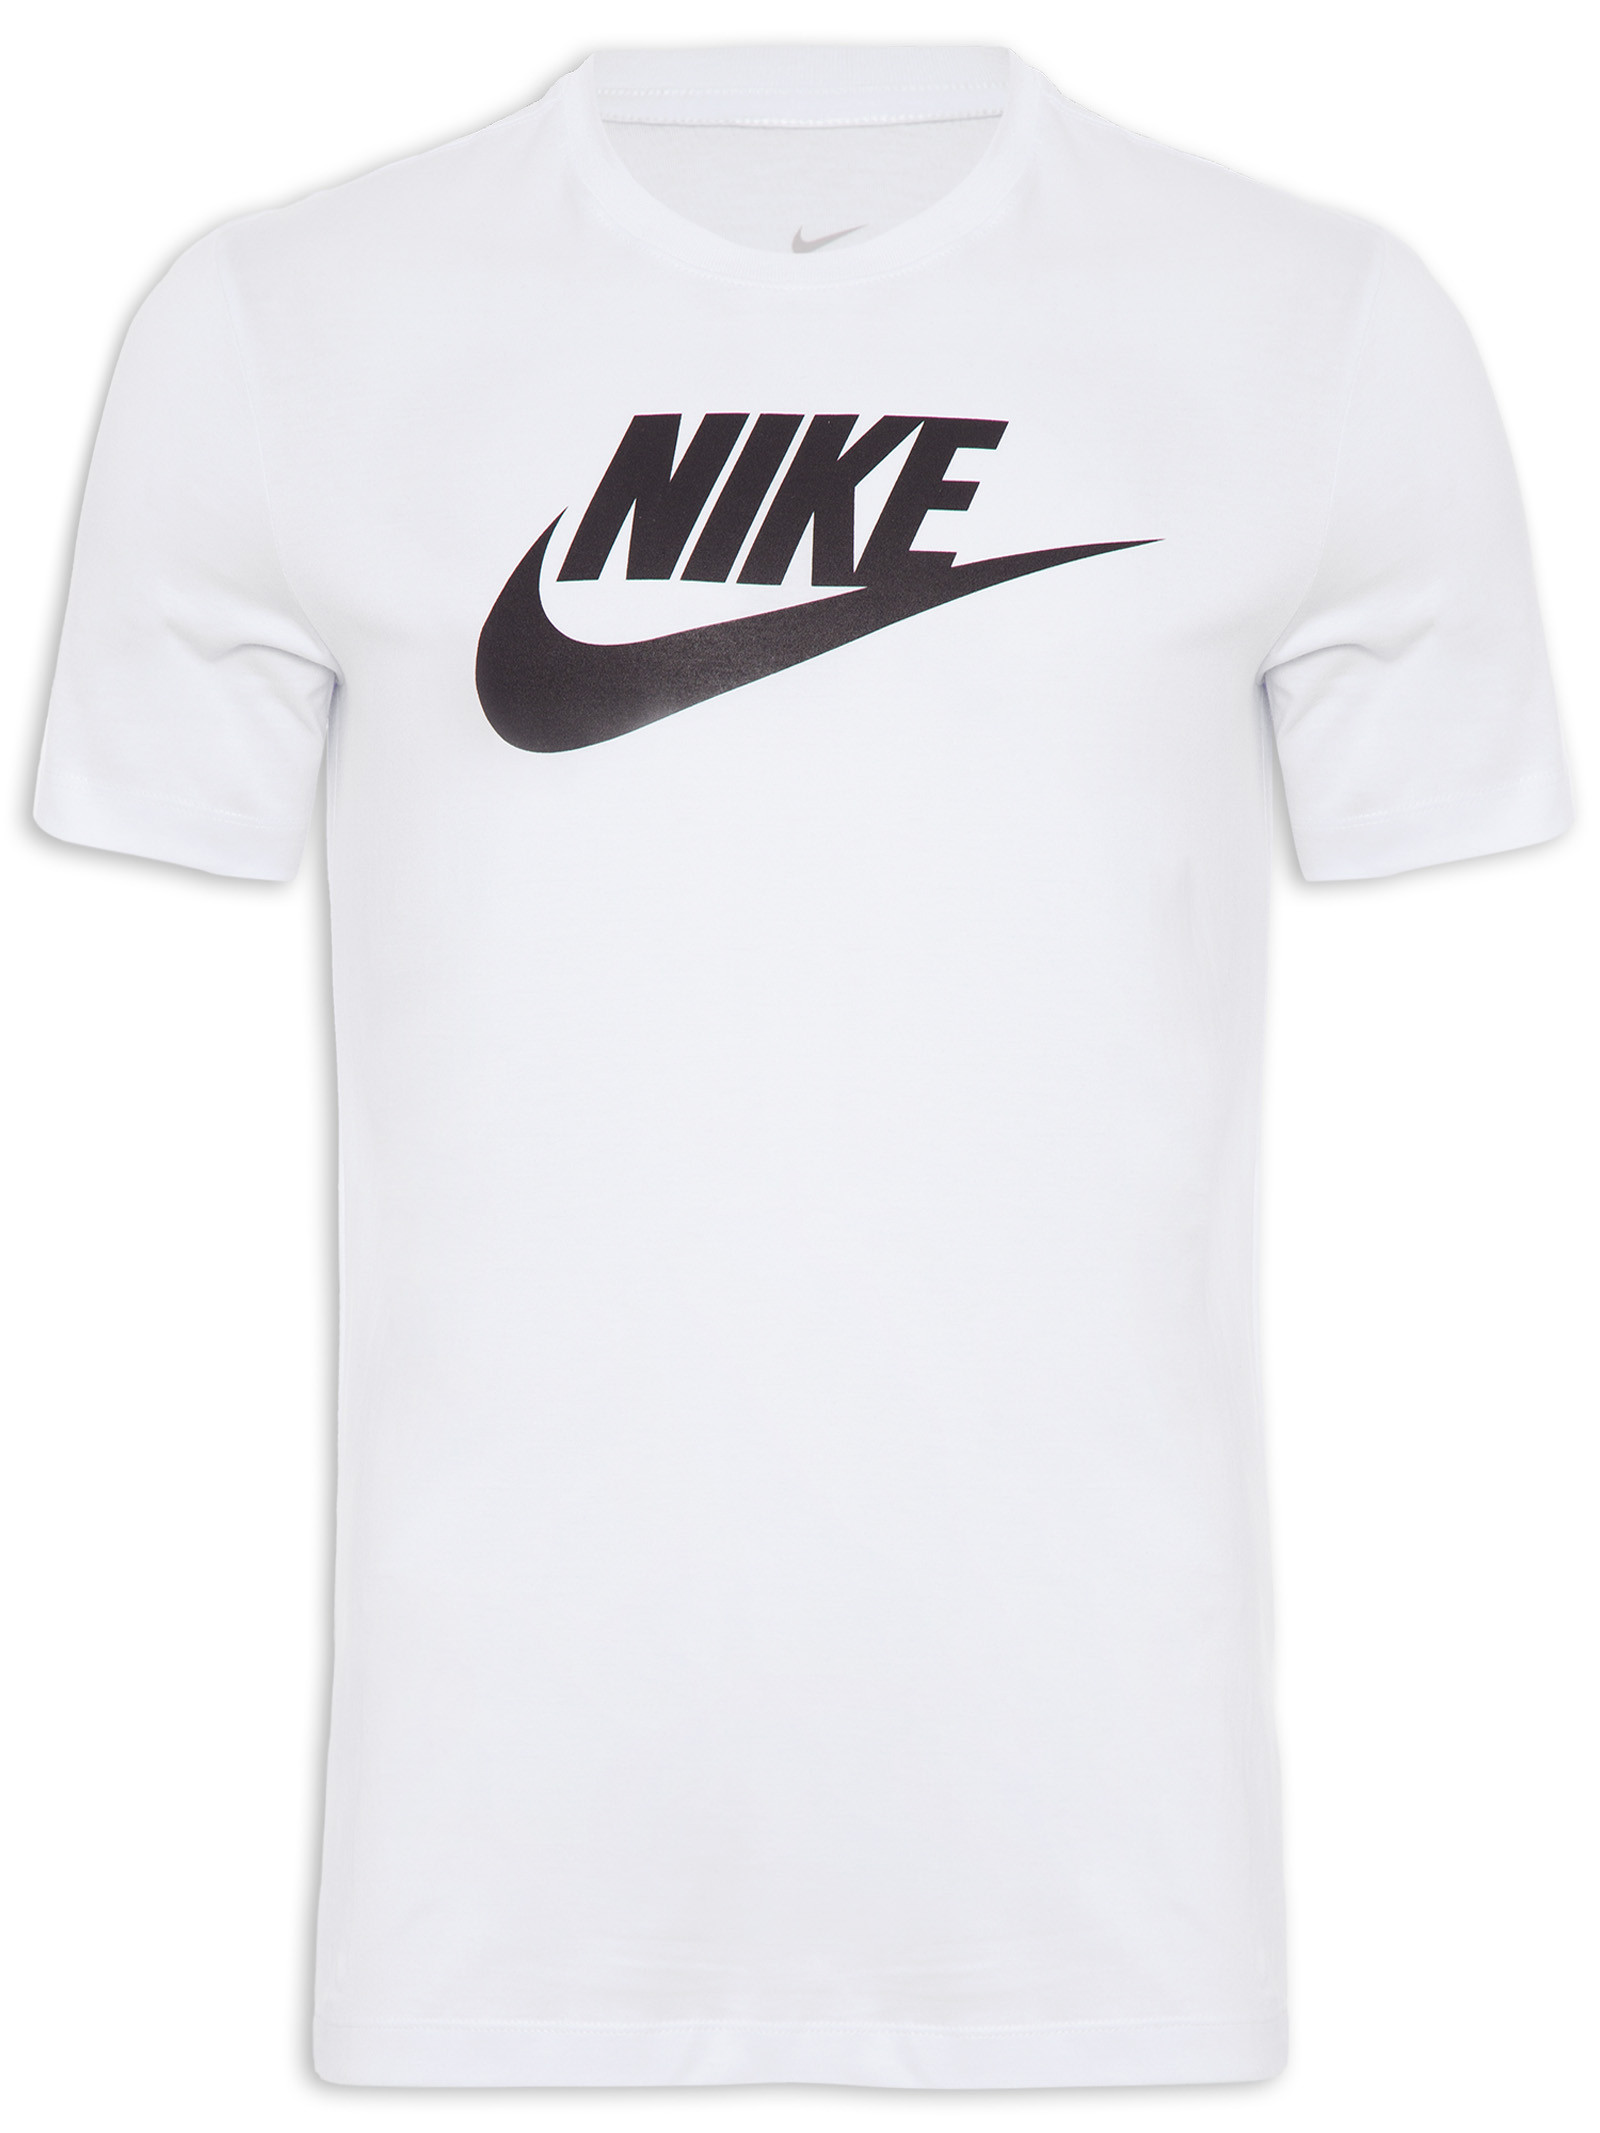 Camiseta Masculina Sportswear Icon Futura - Nike - Branco - Shop2gether